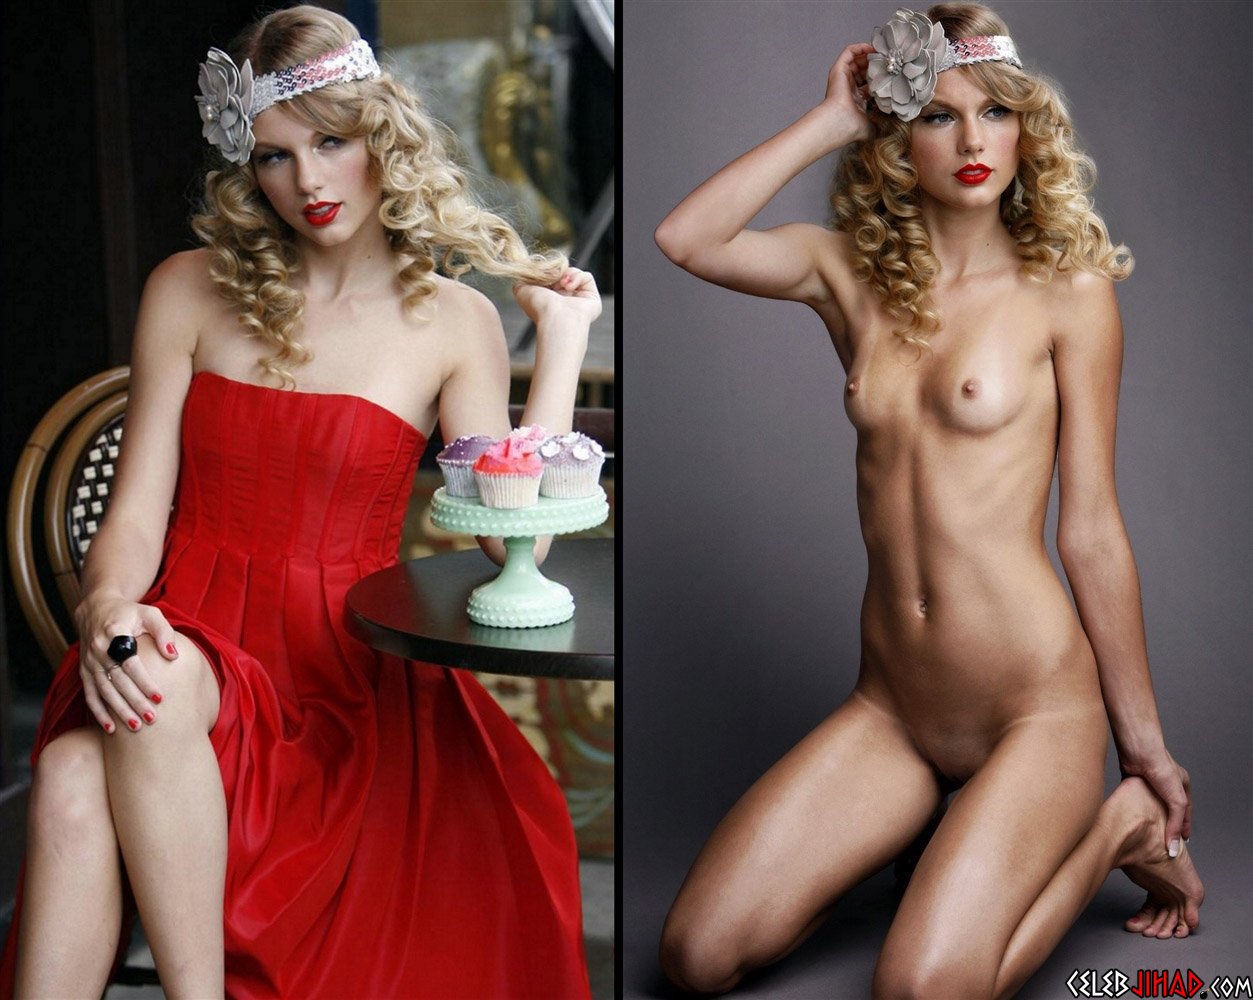 Taylor swify nude